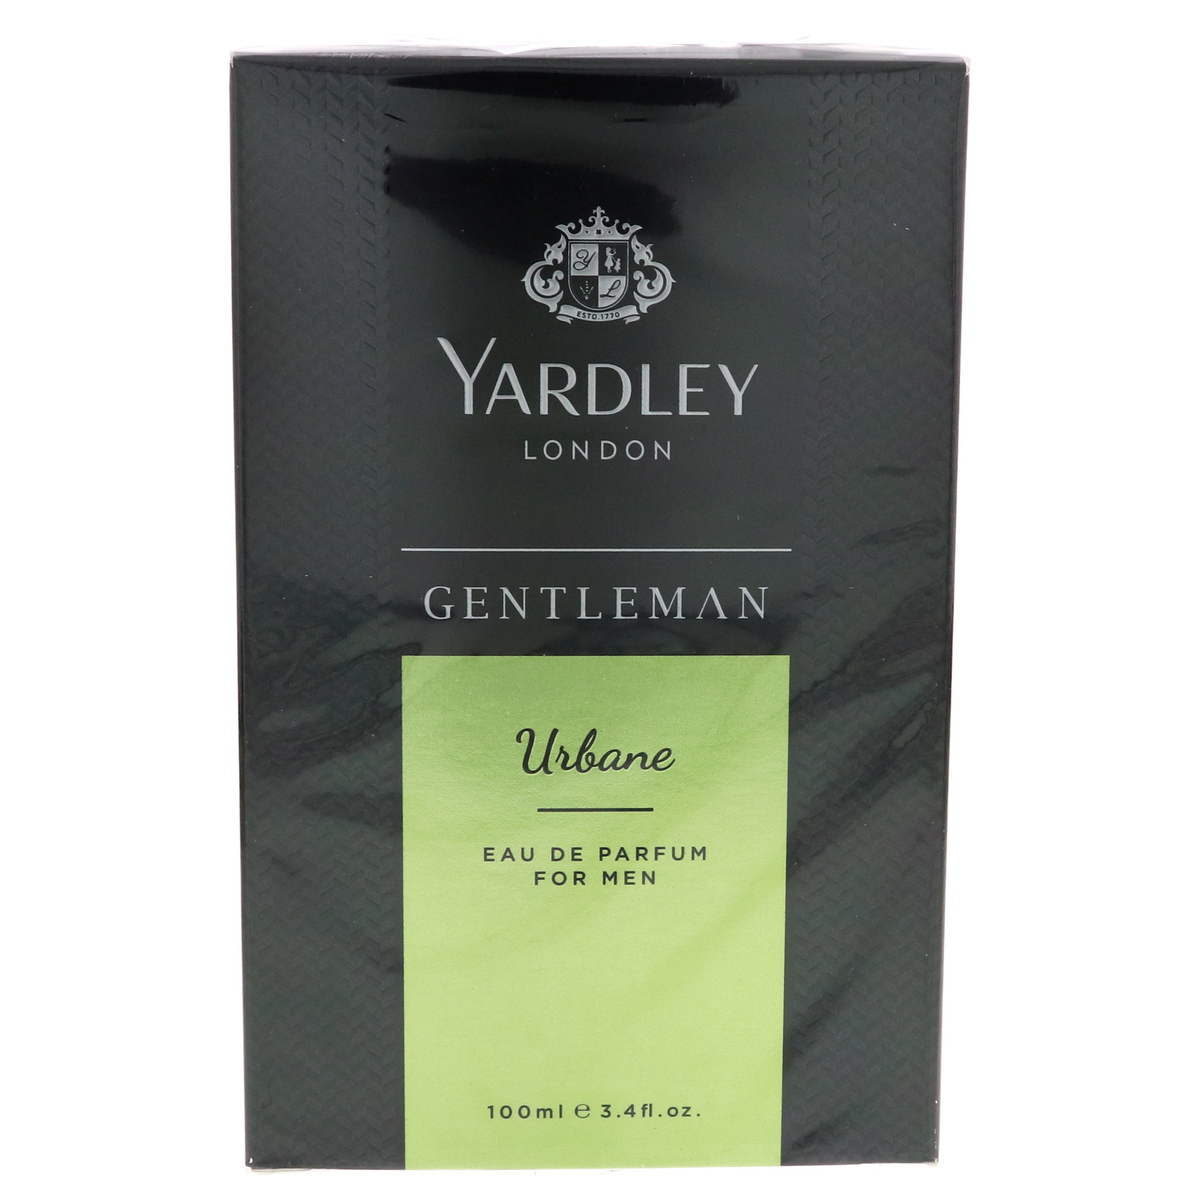 Yardley Gentleman Urbane Eau De Parfum For Men 100ml